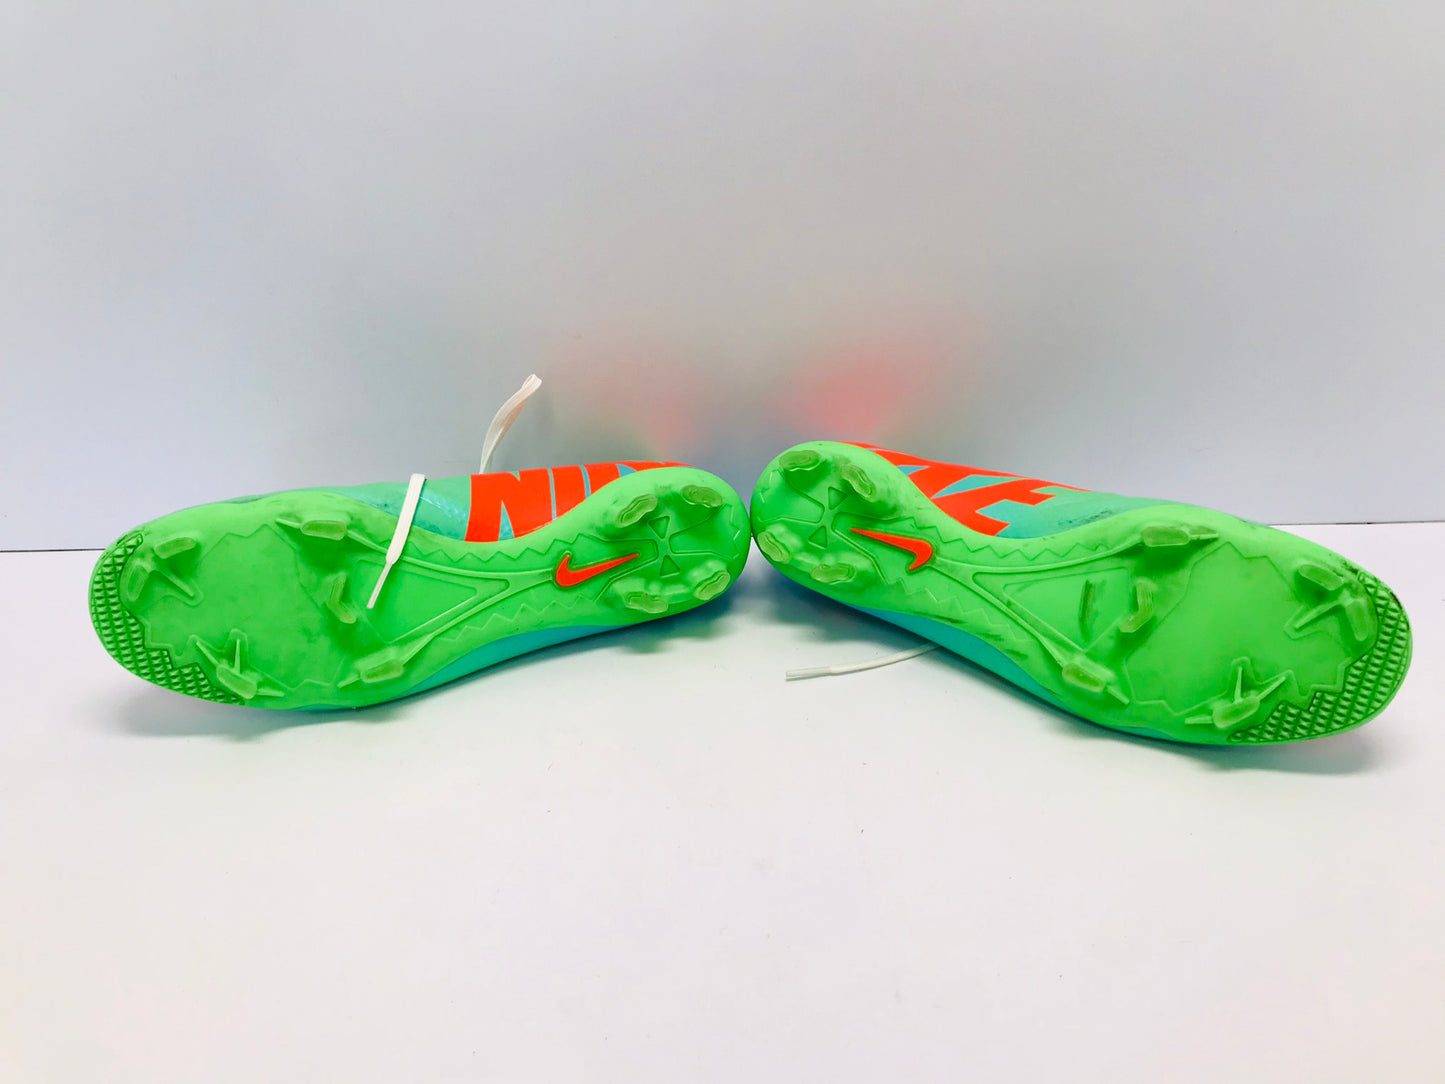 Soccer Shoes Cleats Men's Size 10.5 Nike Lime Orange Few Marks